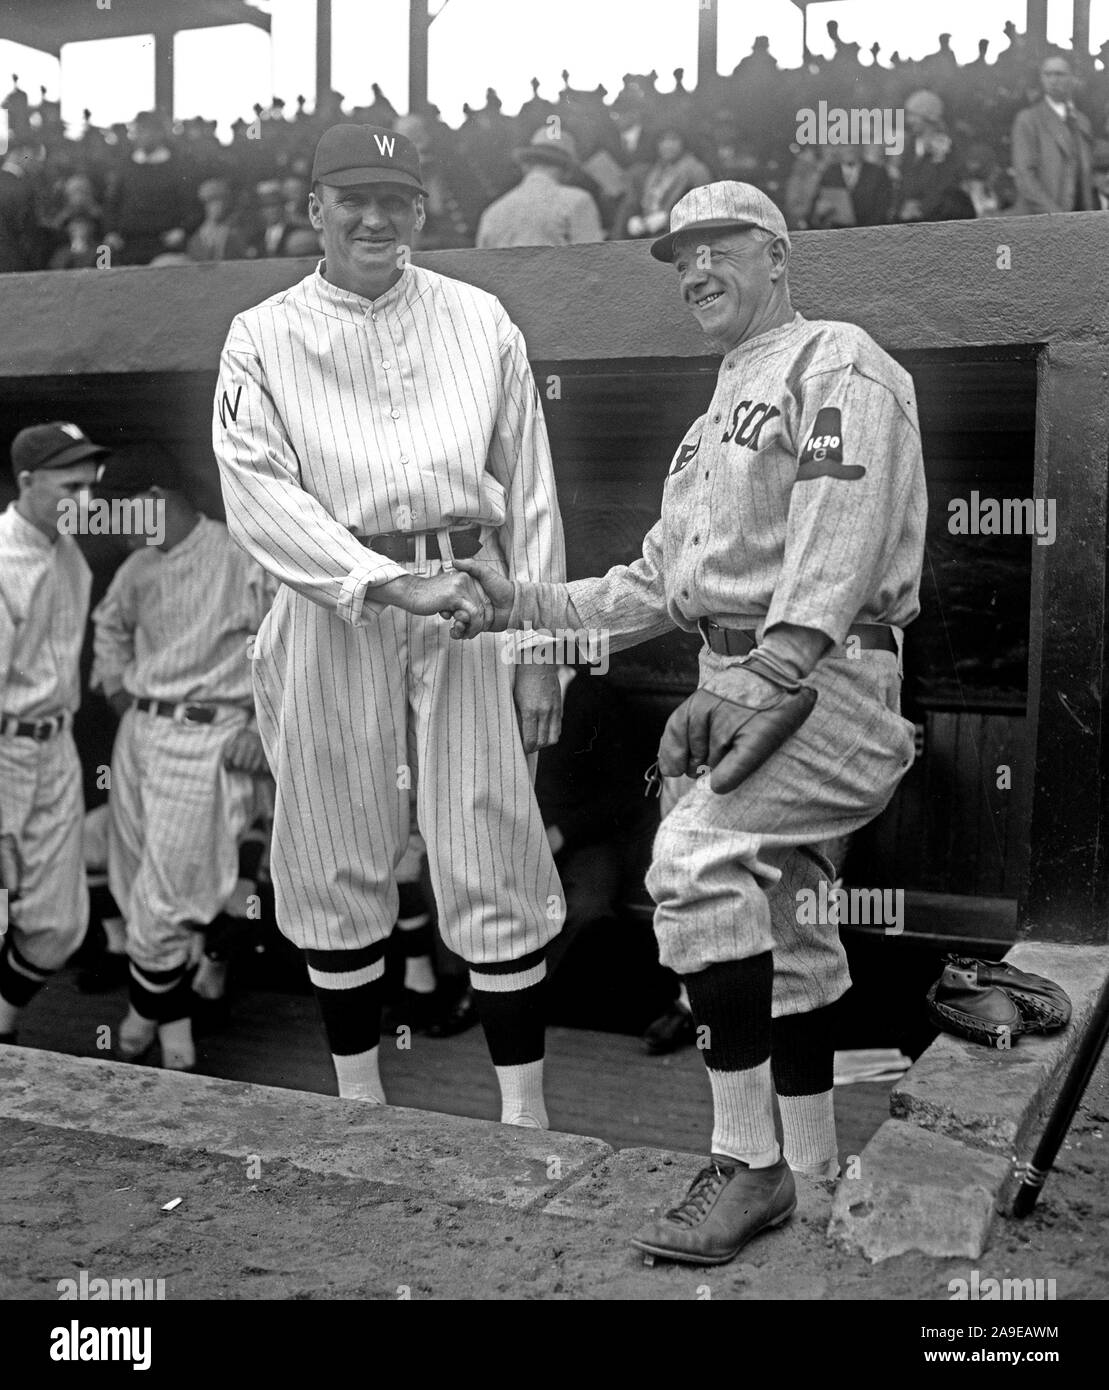 Washington and Boston open baseball season in Washington. Heinie Wagner, manager of the Boston Red Sox, greets Walter Johnson, manager of the Washington Nationals ca. 1930 Stock Photo